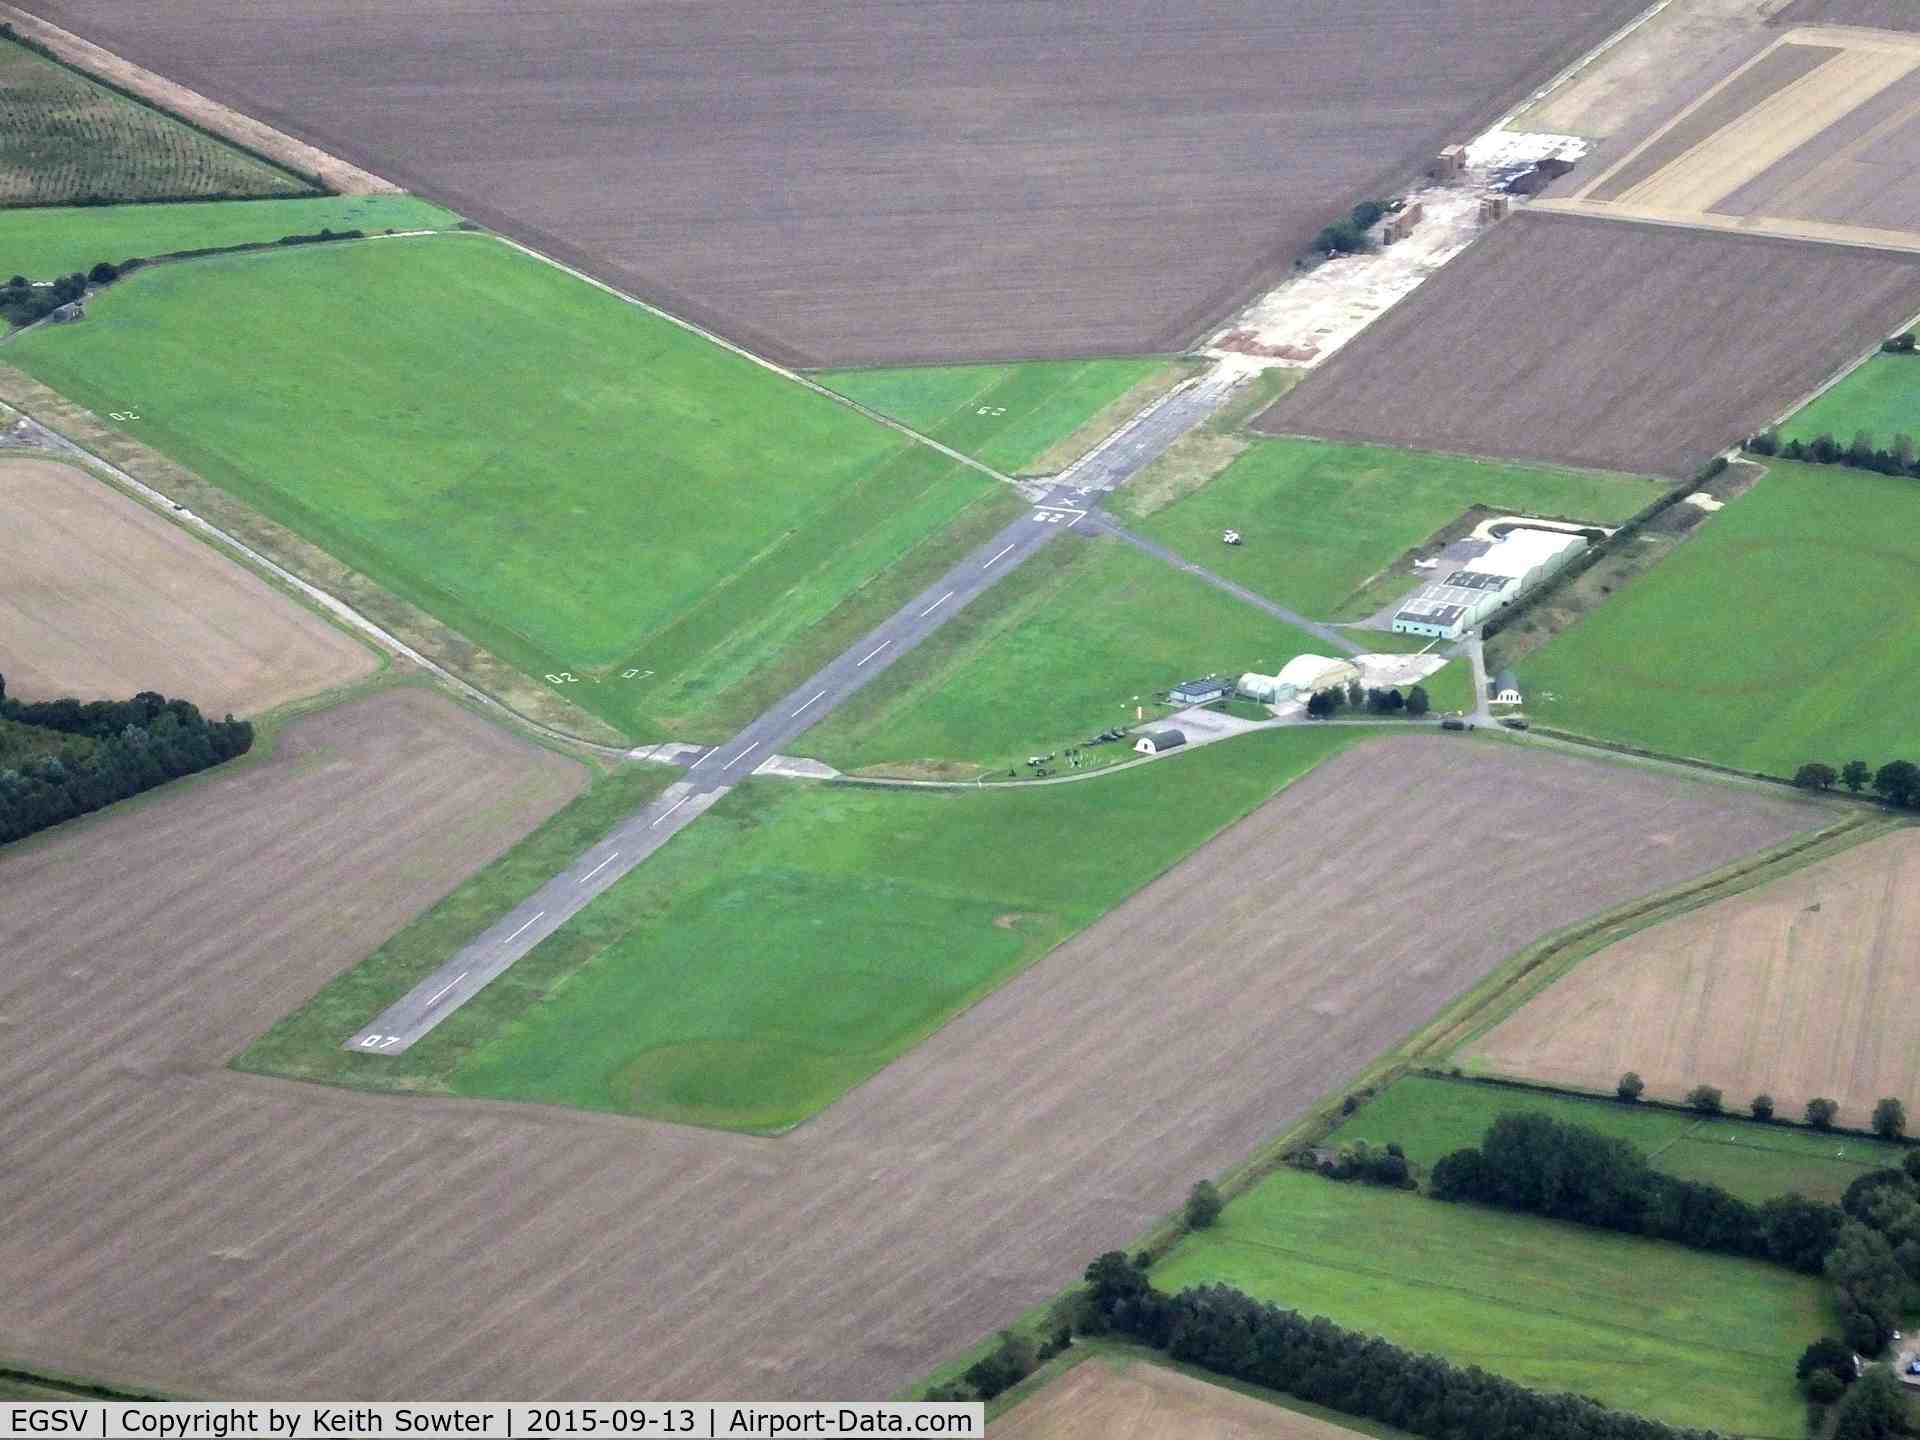 Old Buckenham Airport, Norwich, England United Kingdom (EGSV) - Taken from a hot air balloon